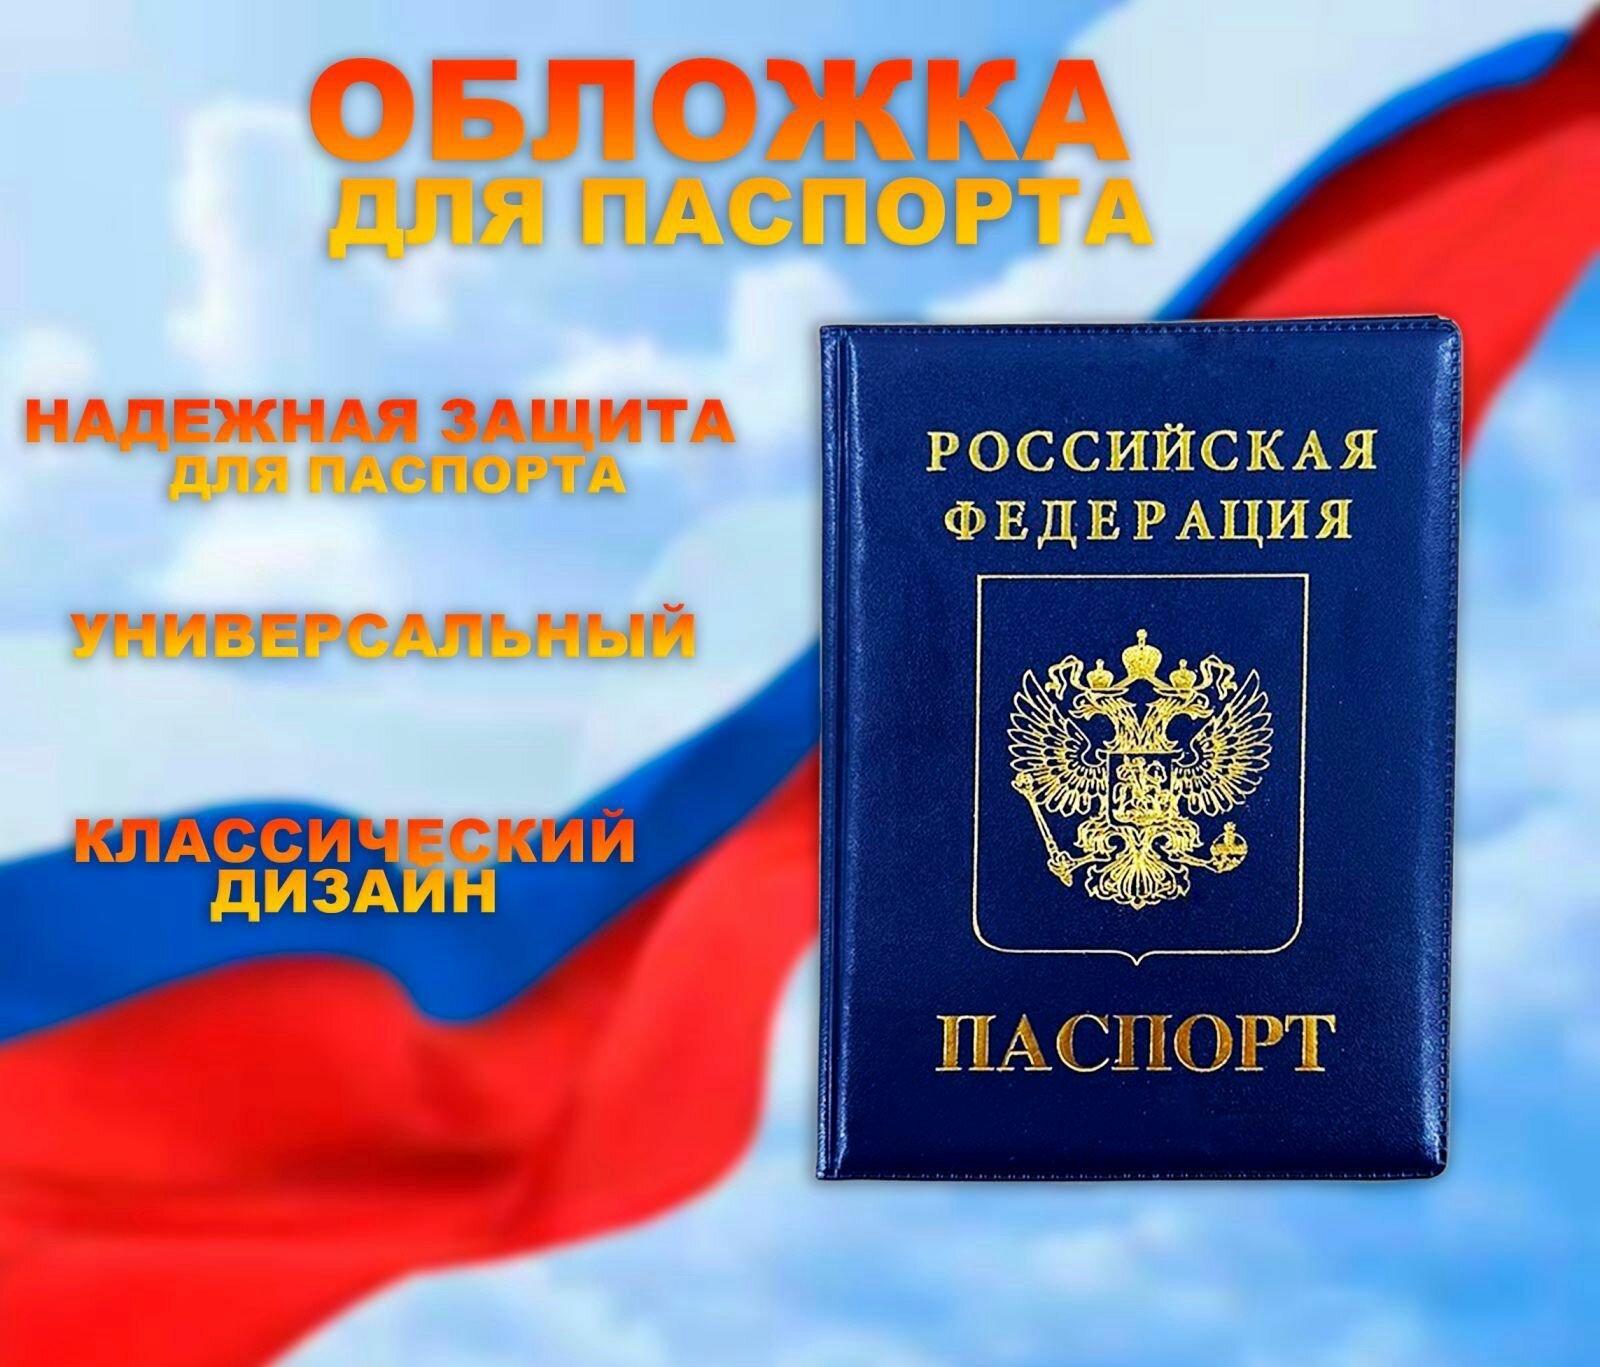 Обложка на паспорт, цвет темно-синий / Обложка для документов